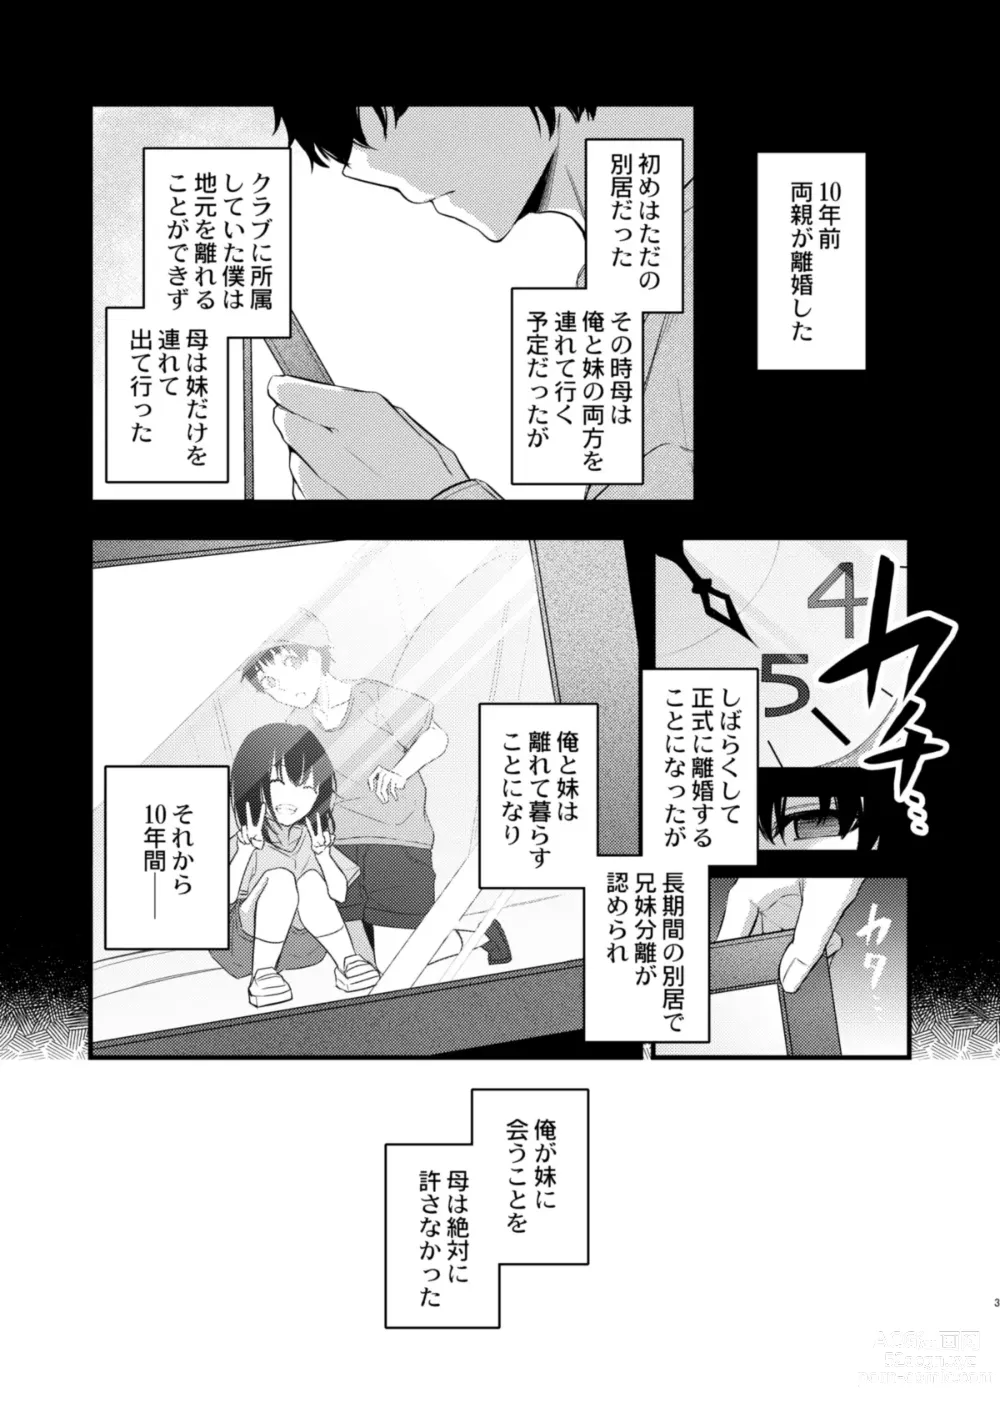 Page 3 of doujinshi PULCHRE BENE RECTE!